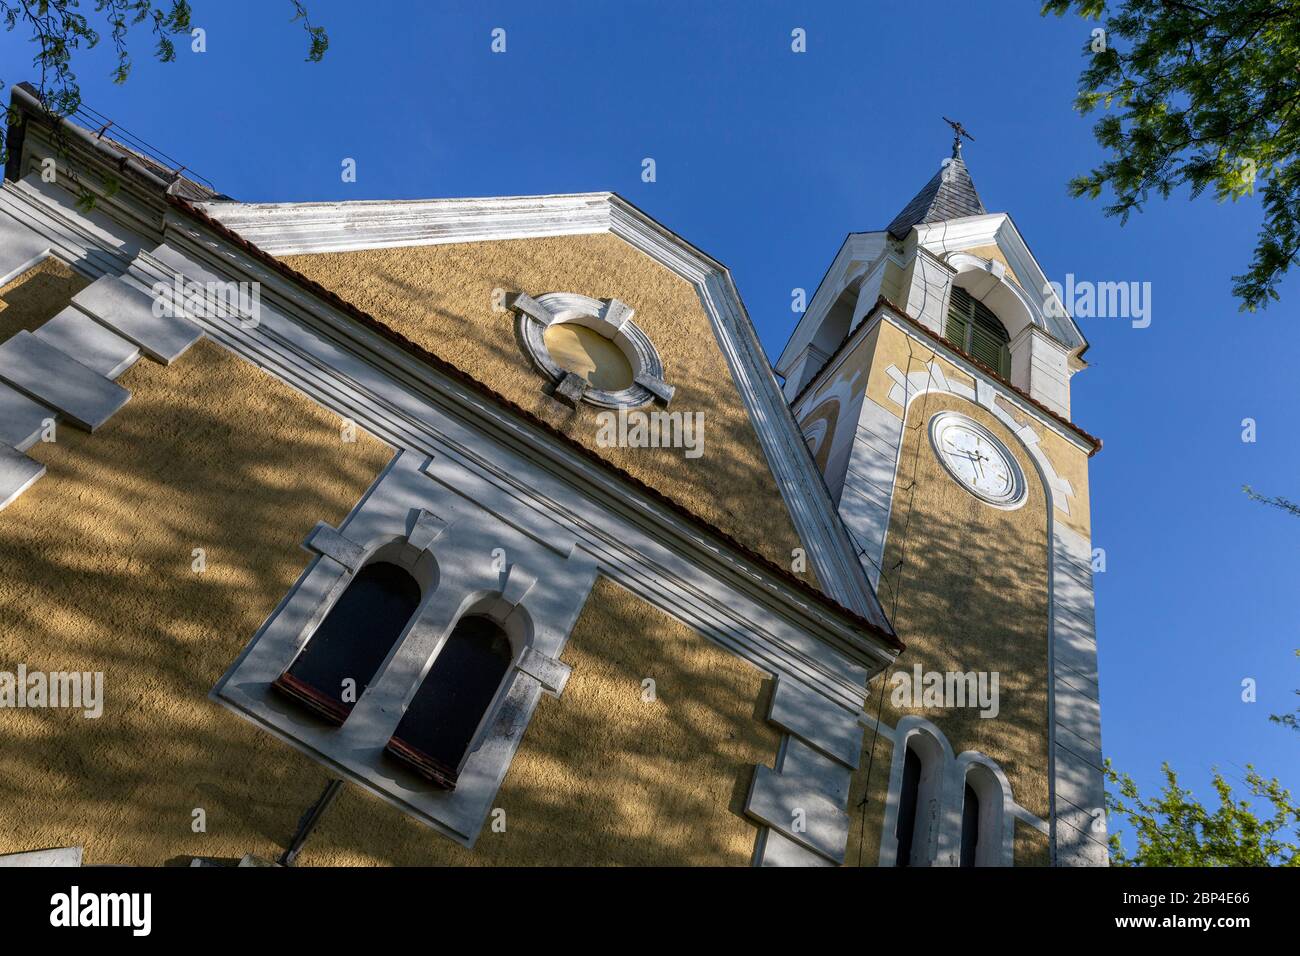 Church of Our Lady (Magyarok nagyasszonya templom) in Besnyo, Hungary Stock Photo